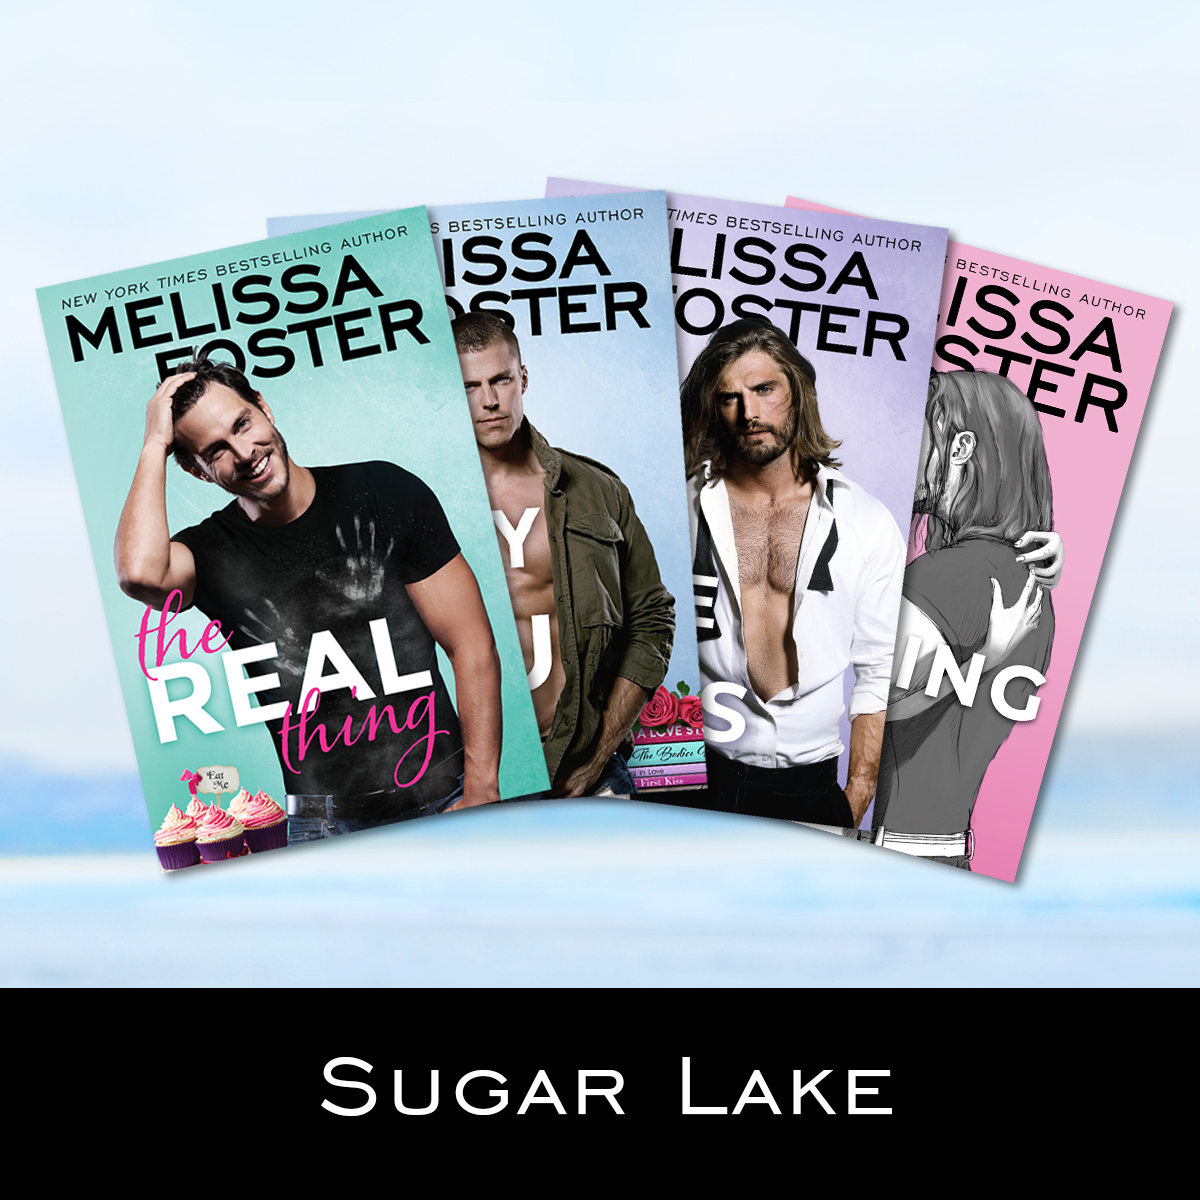 Sugar Lake series by Melissa Foster